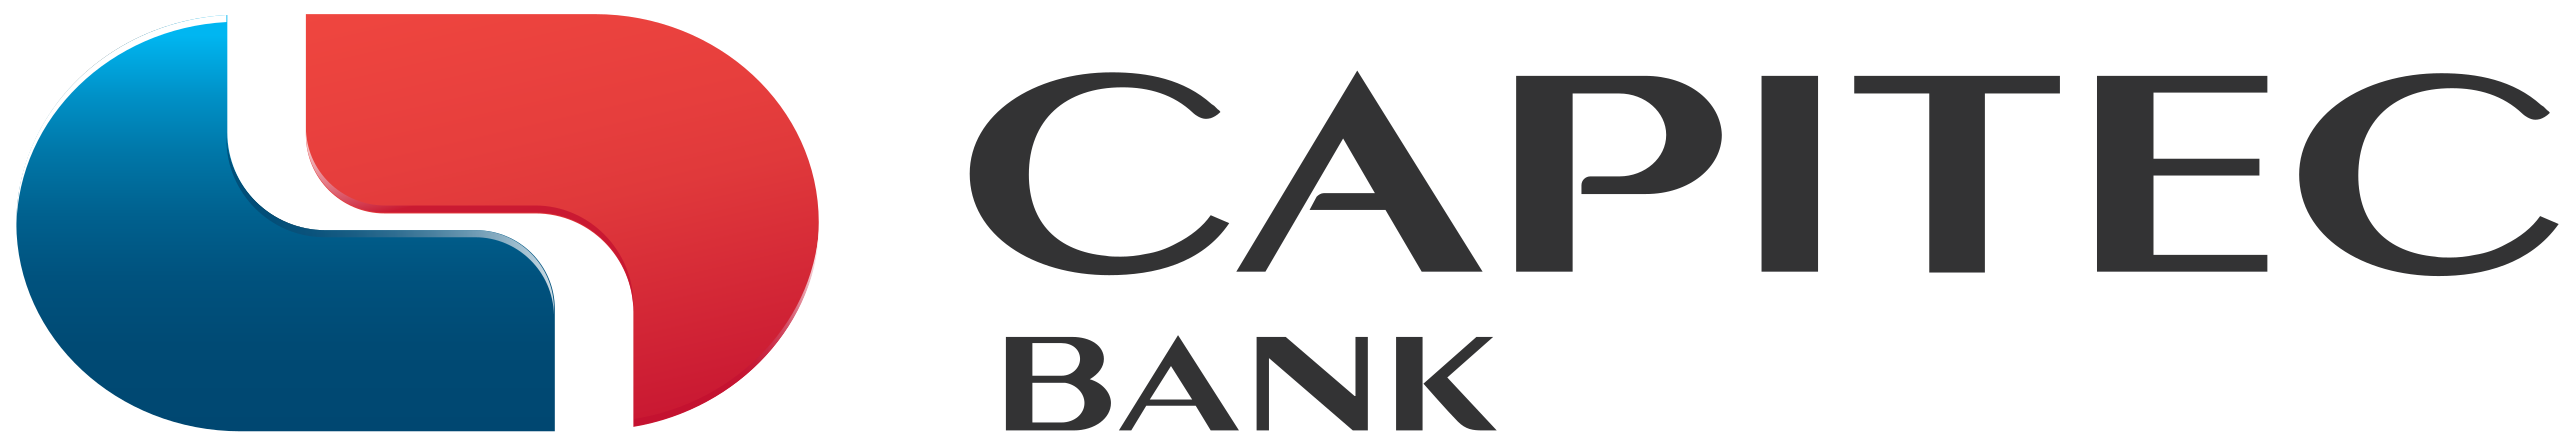 Capitec_Bank_logo.svg